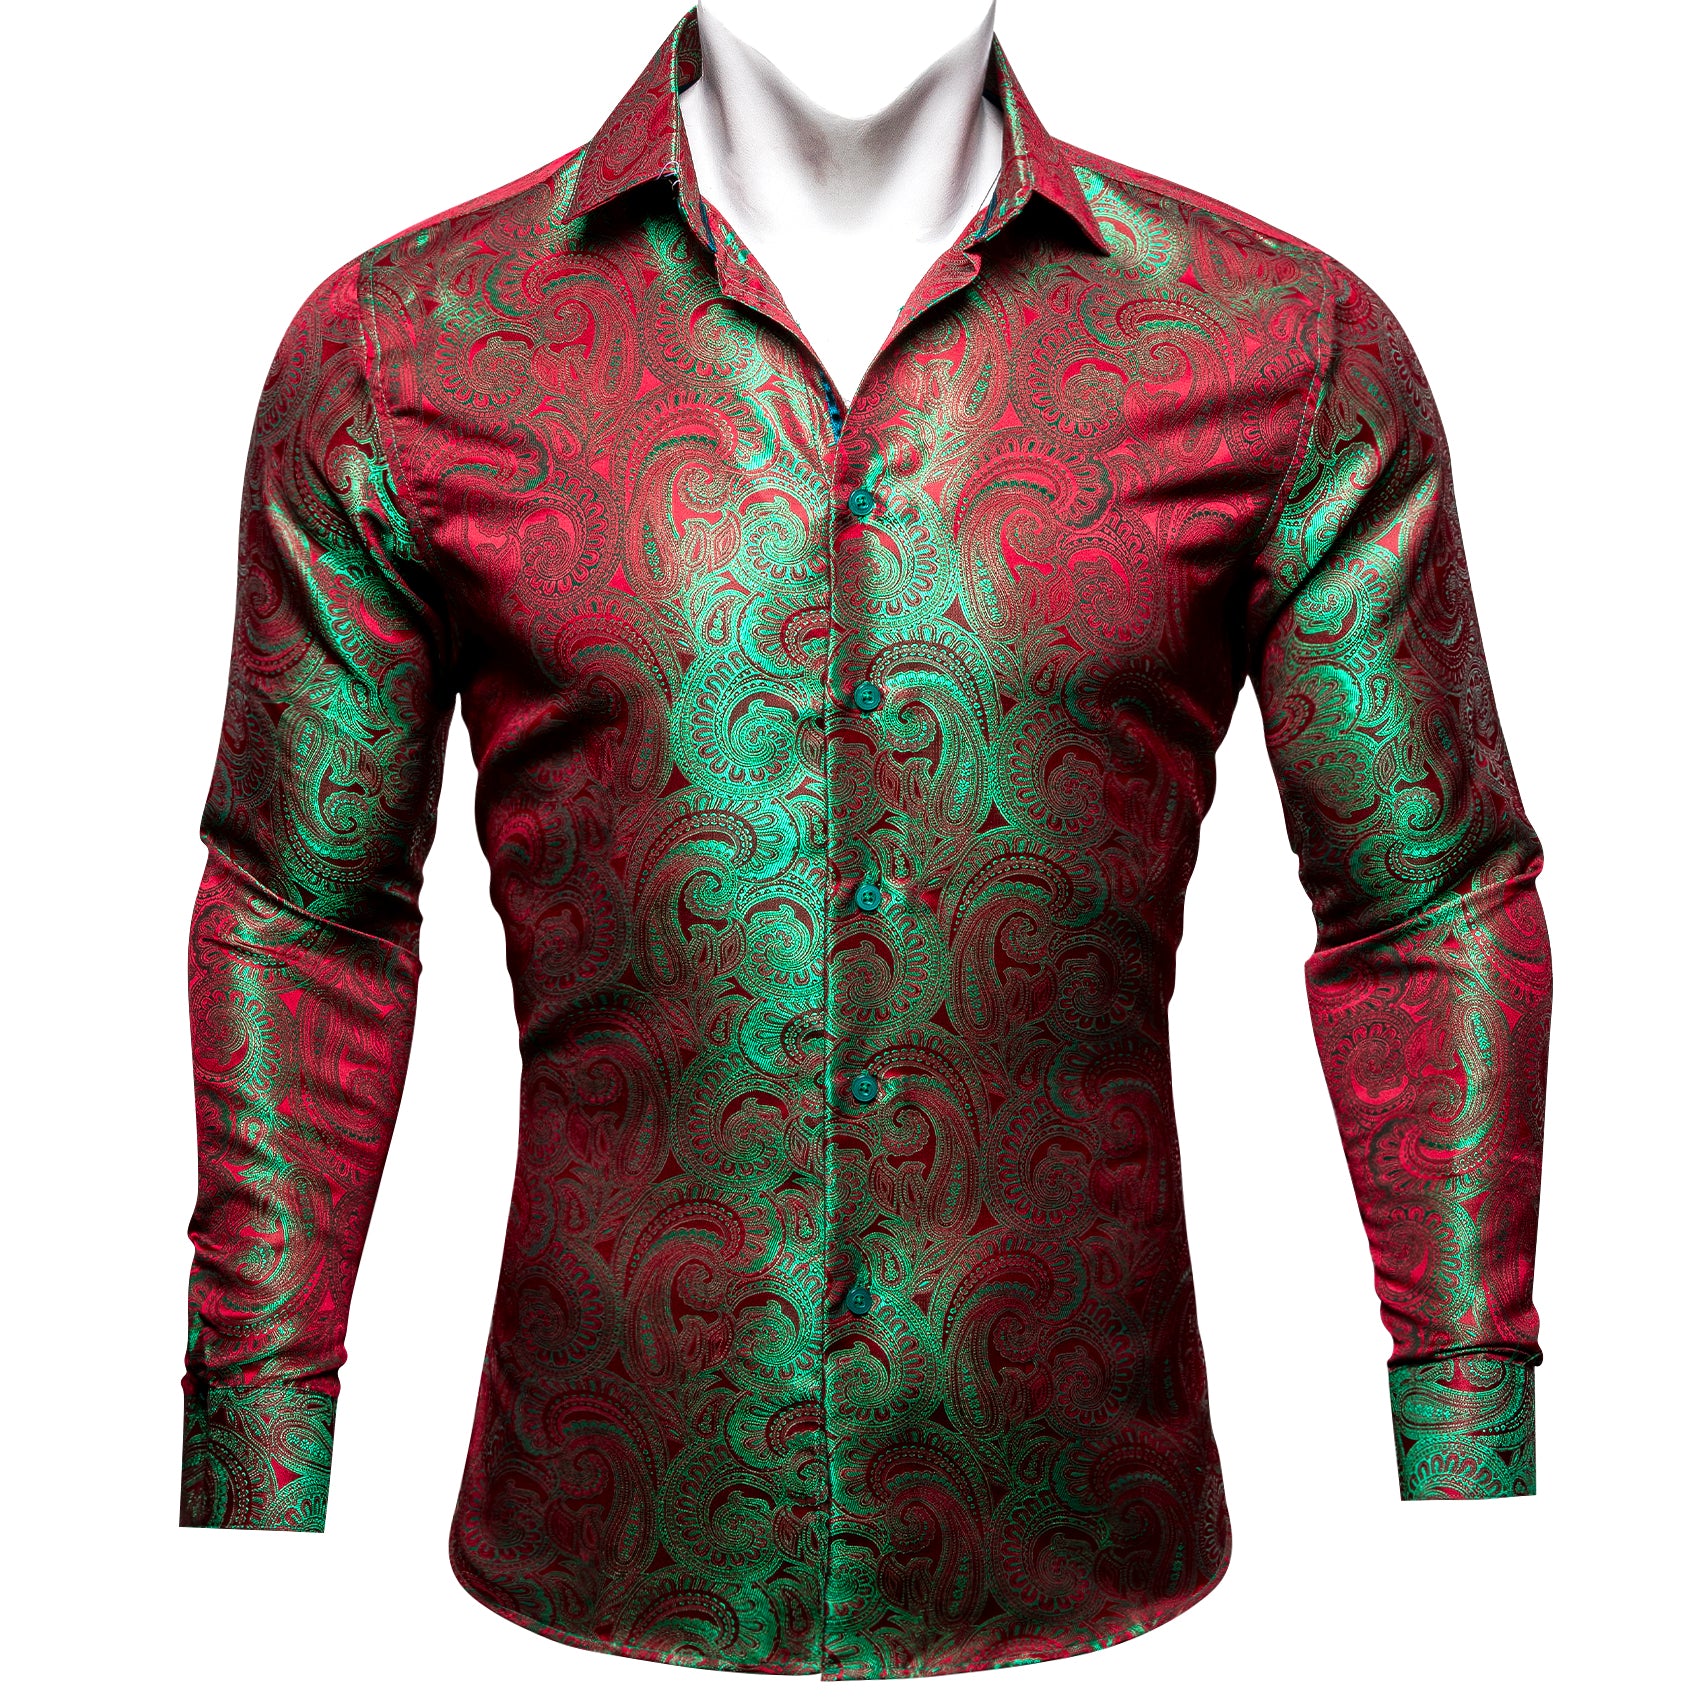 men's patterned dress shirts red shirt green paisley Jacquard long sleever shirt 